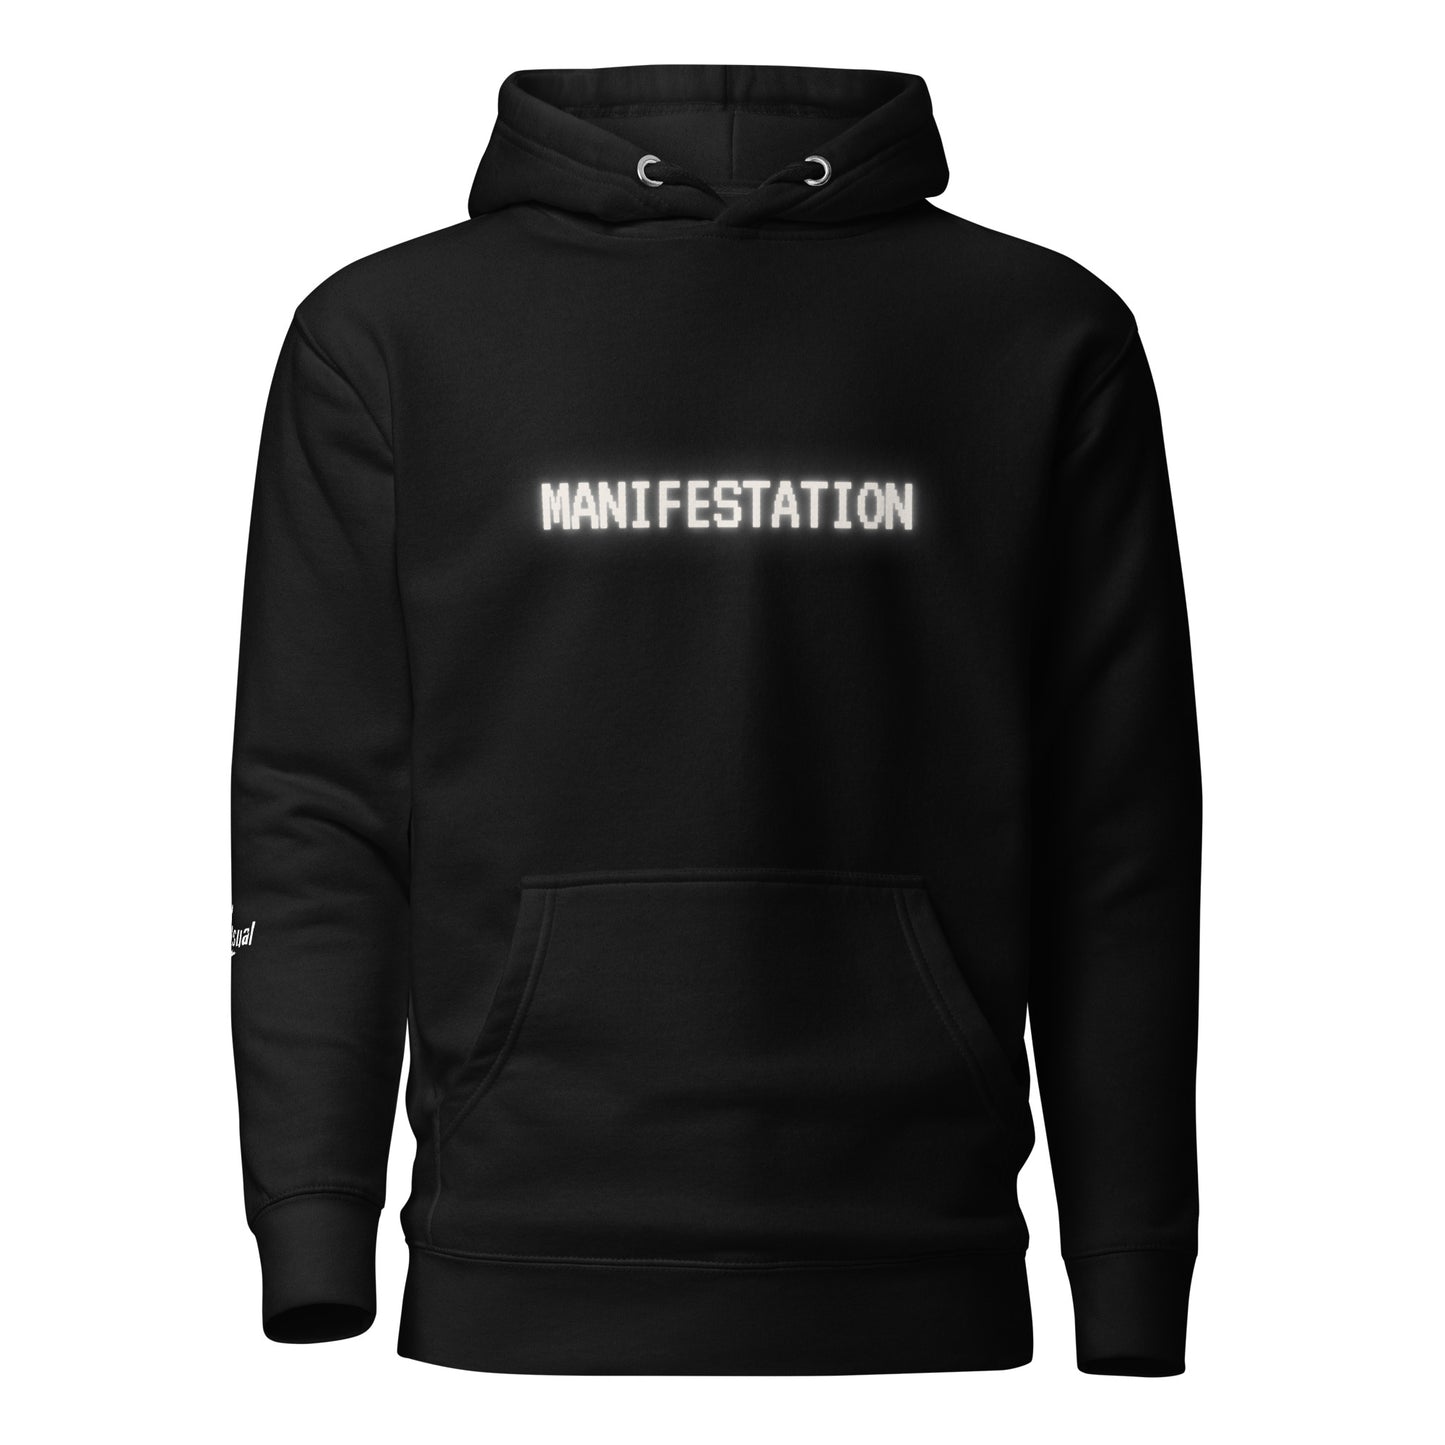 MANIFESTATION hoodie